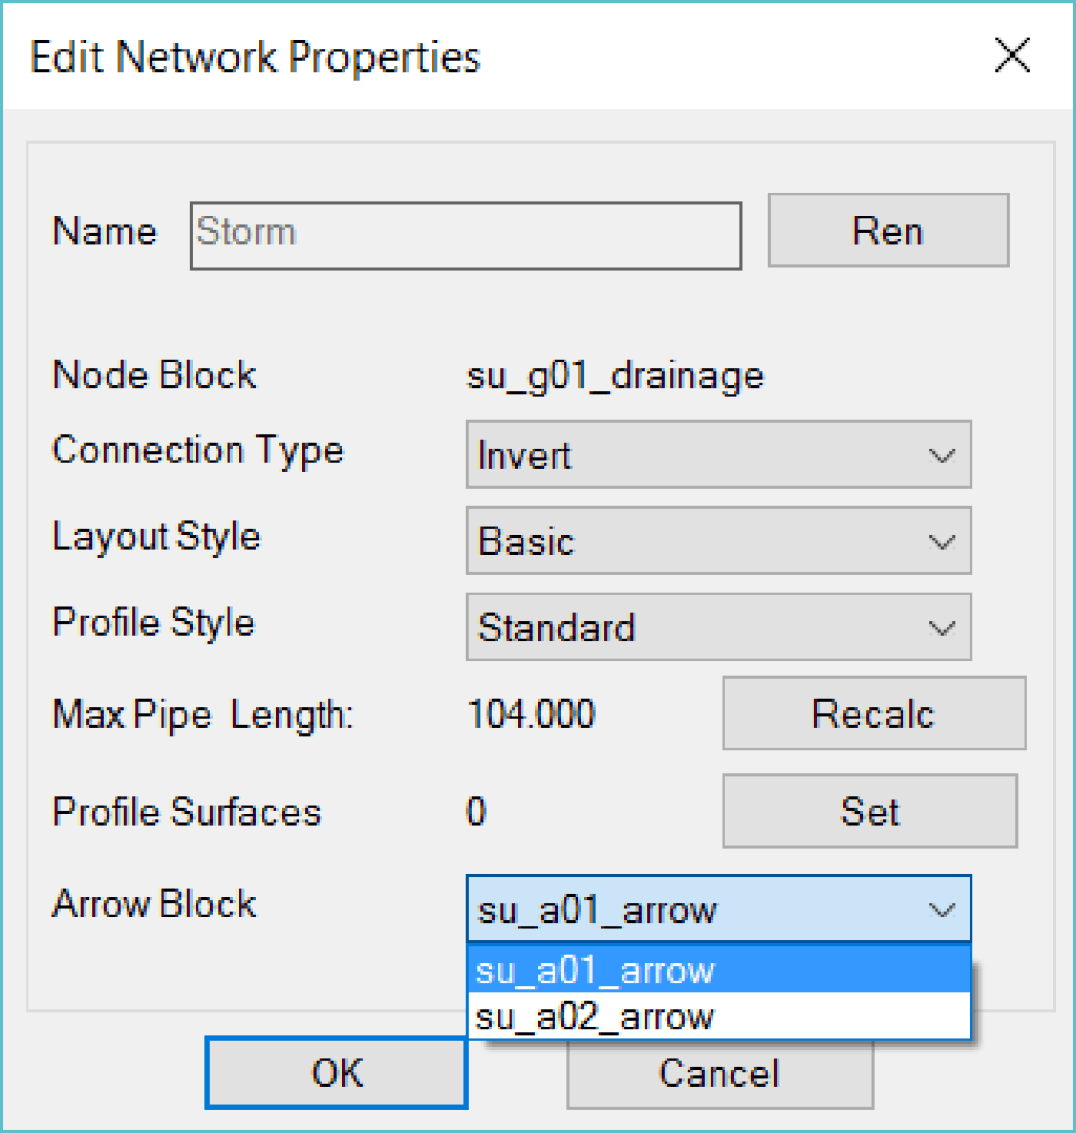 Edit Network Properties